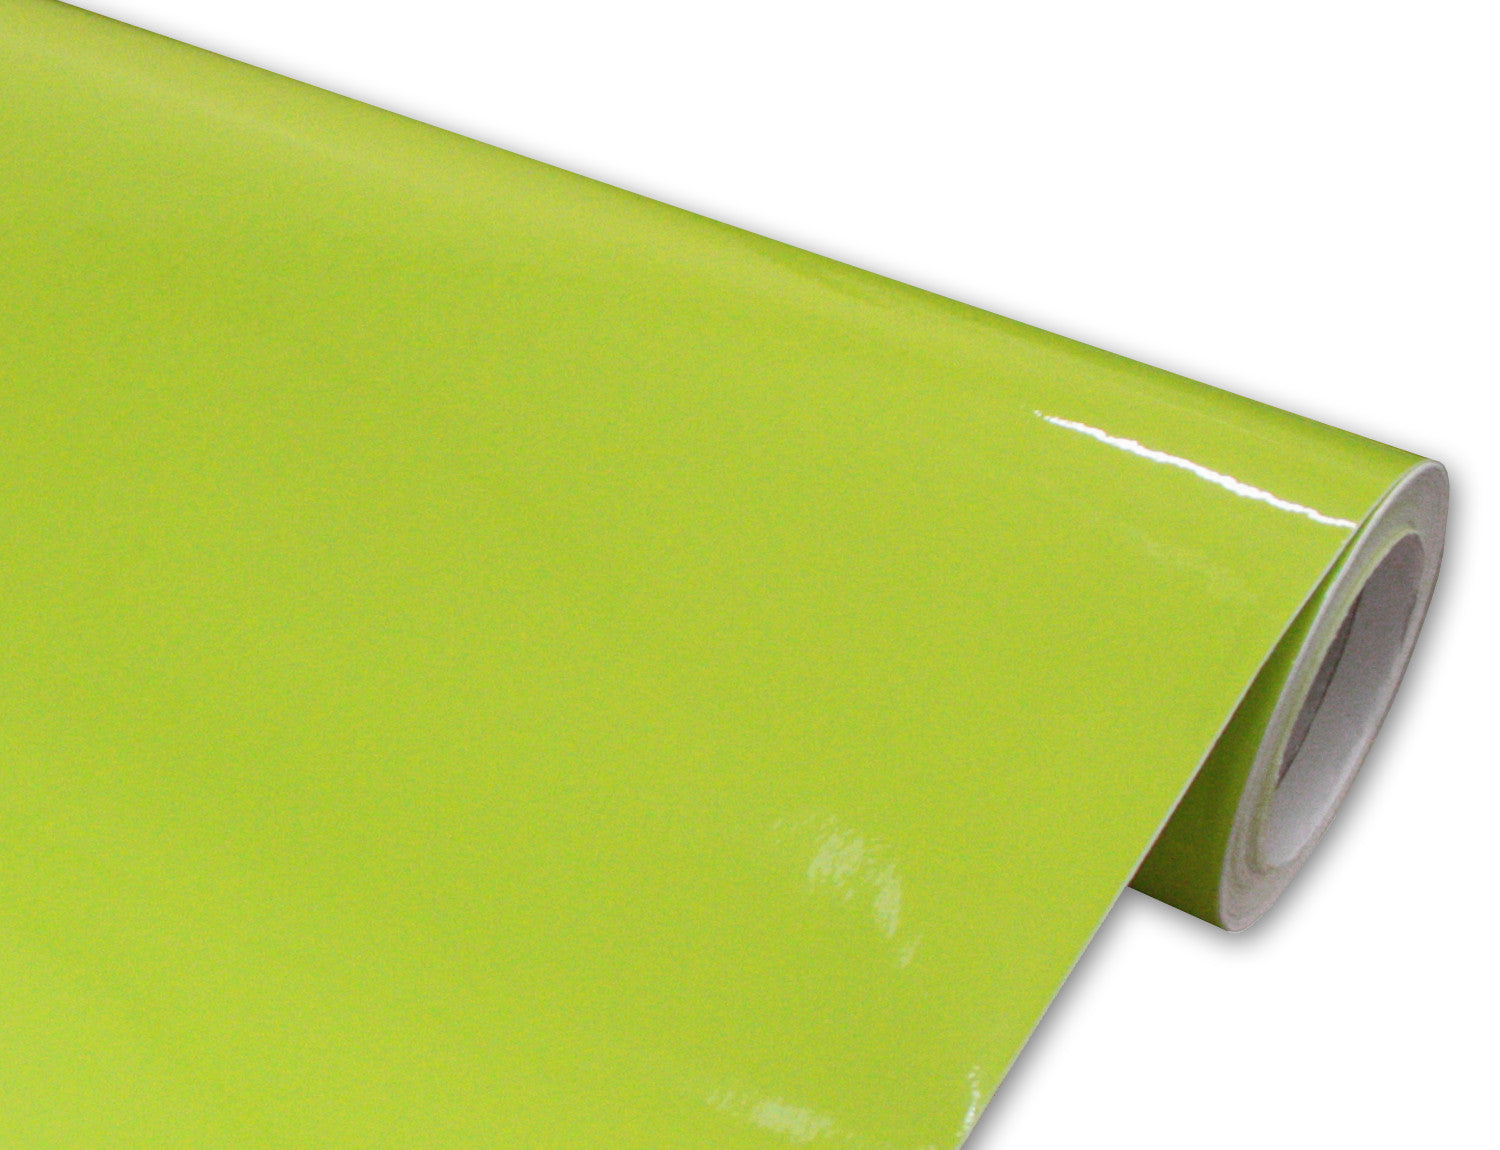 Econ Wrap Film Series - Premium High Gloss Wasabi Green - Hachi Auto